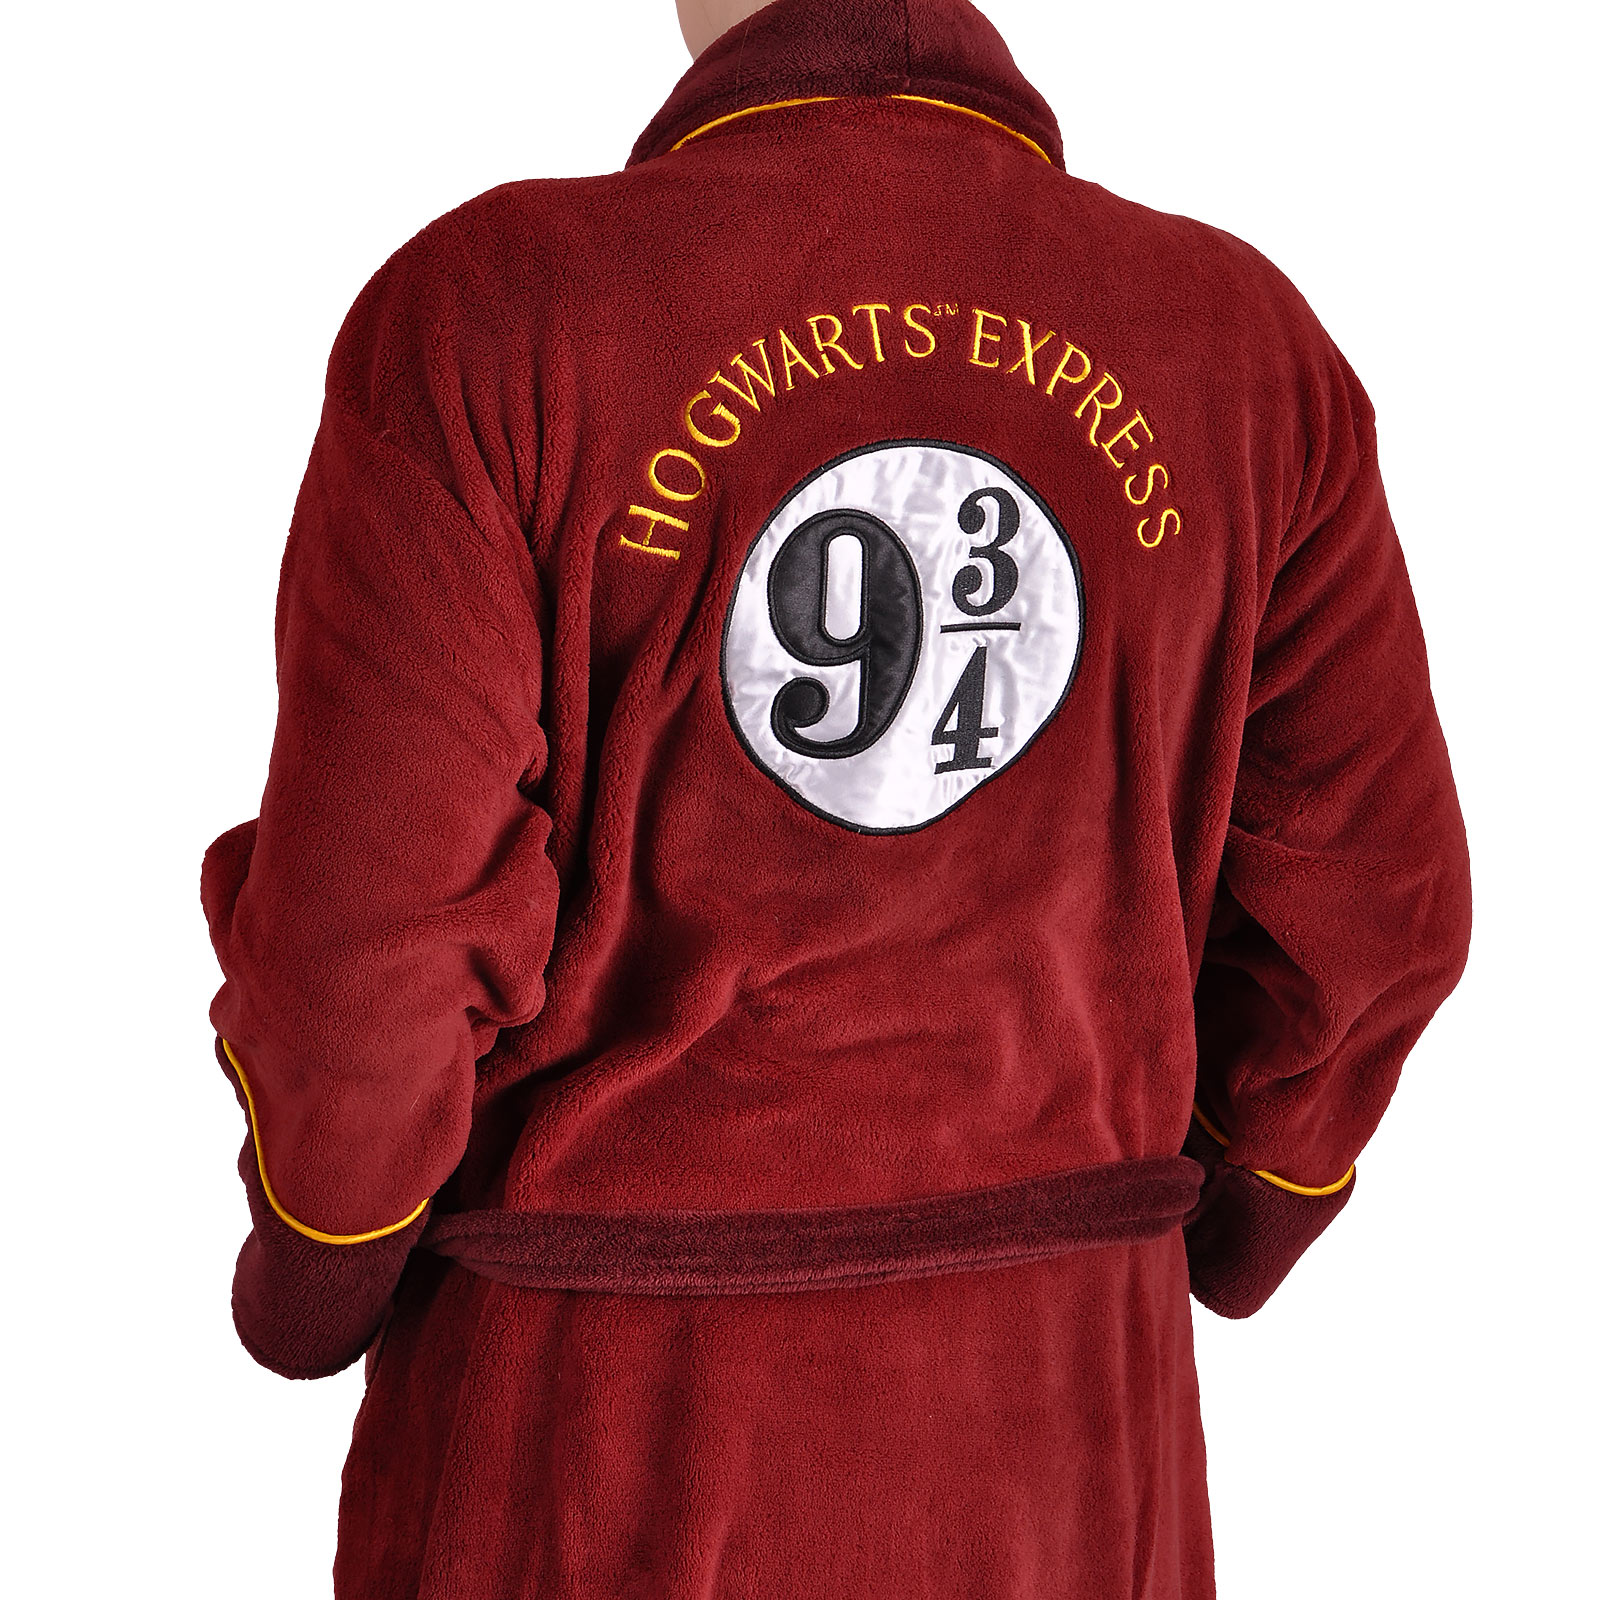 Harry Potter - Hogwarts Express 9 3/4 Fleece Badjas